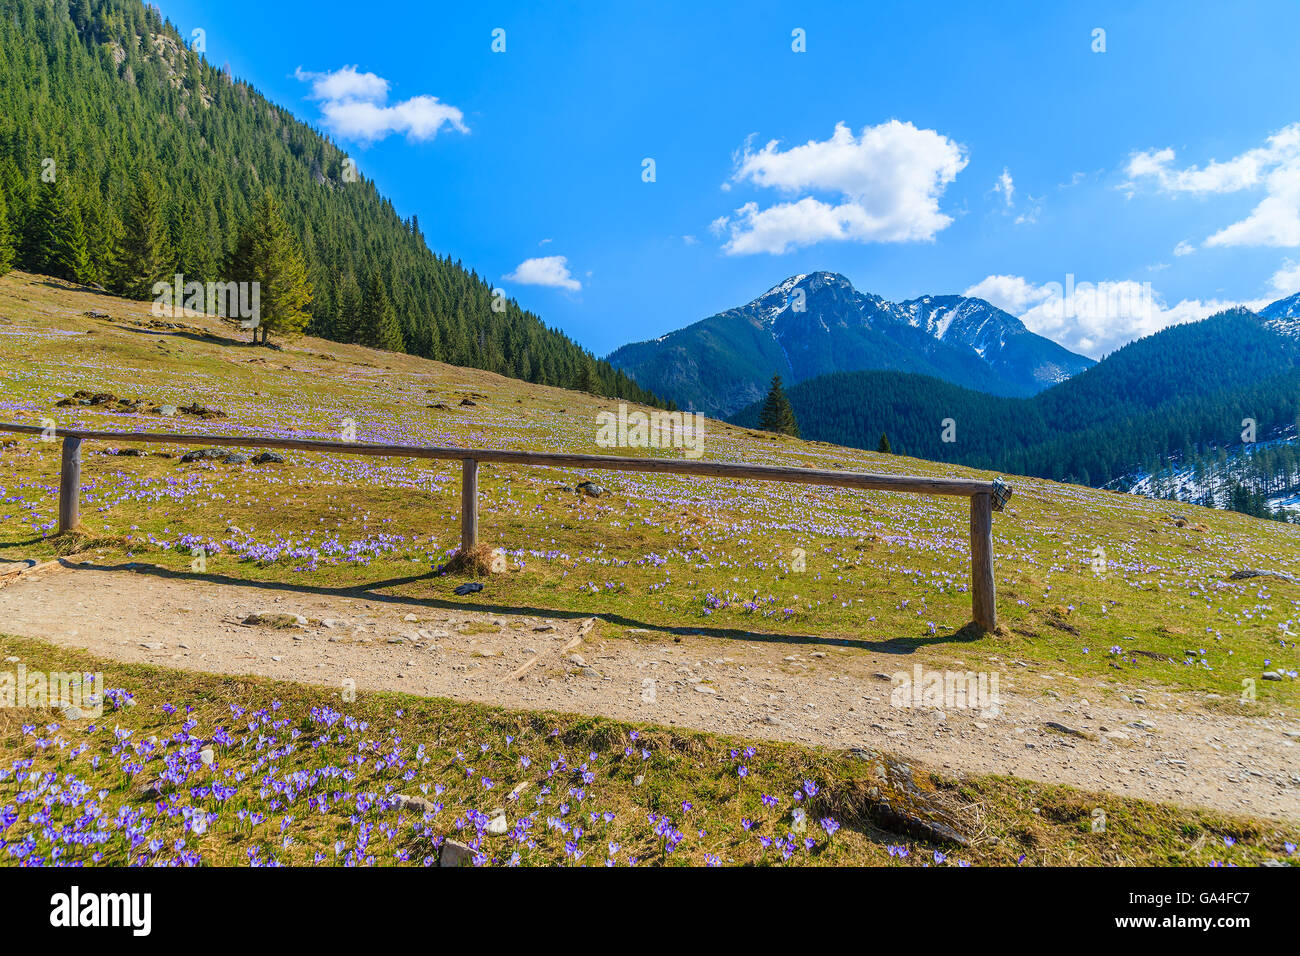 Zaun entlang wandern Weg auf Wiese mit blühenden Krokus Blumen in Chocholowska Tal, Tatra-Gebirge, Polen Stockfoto